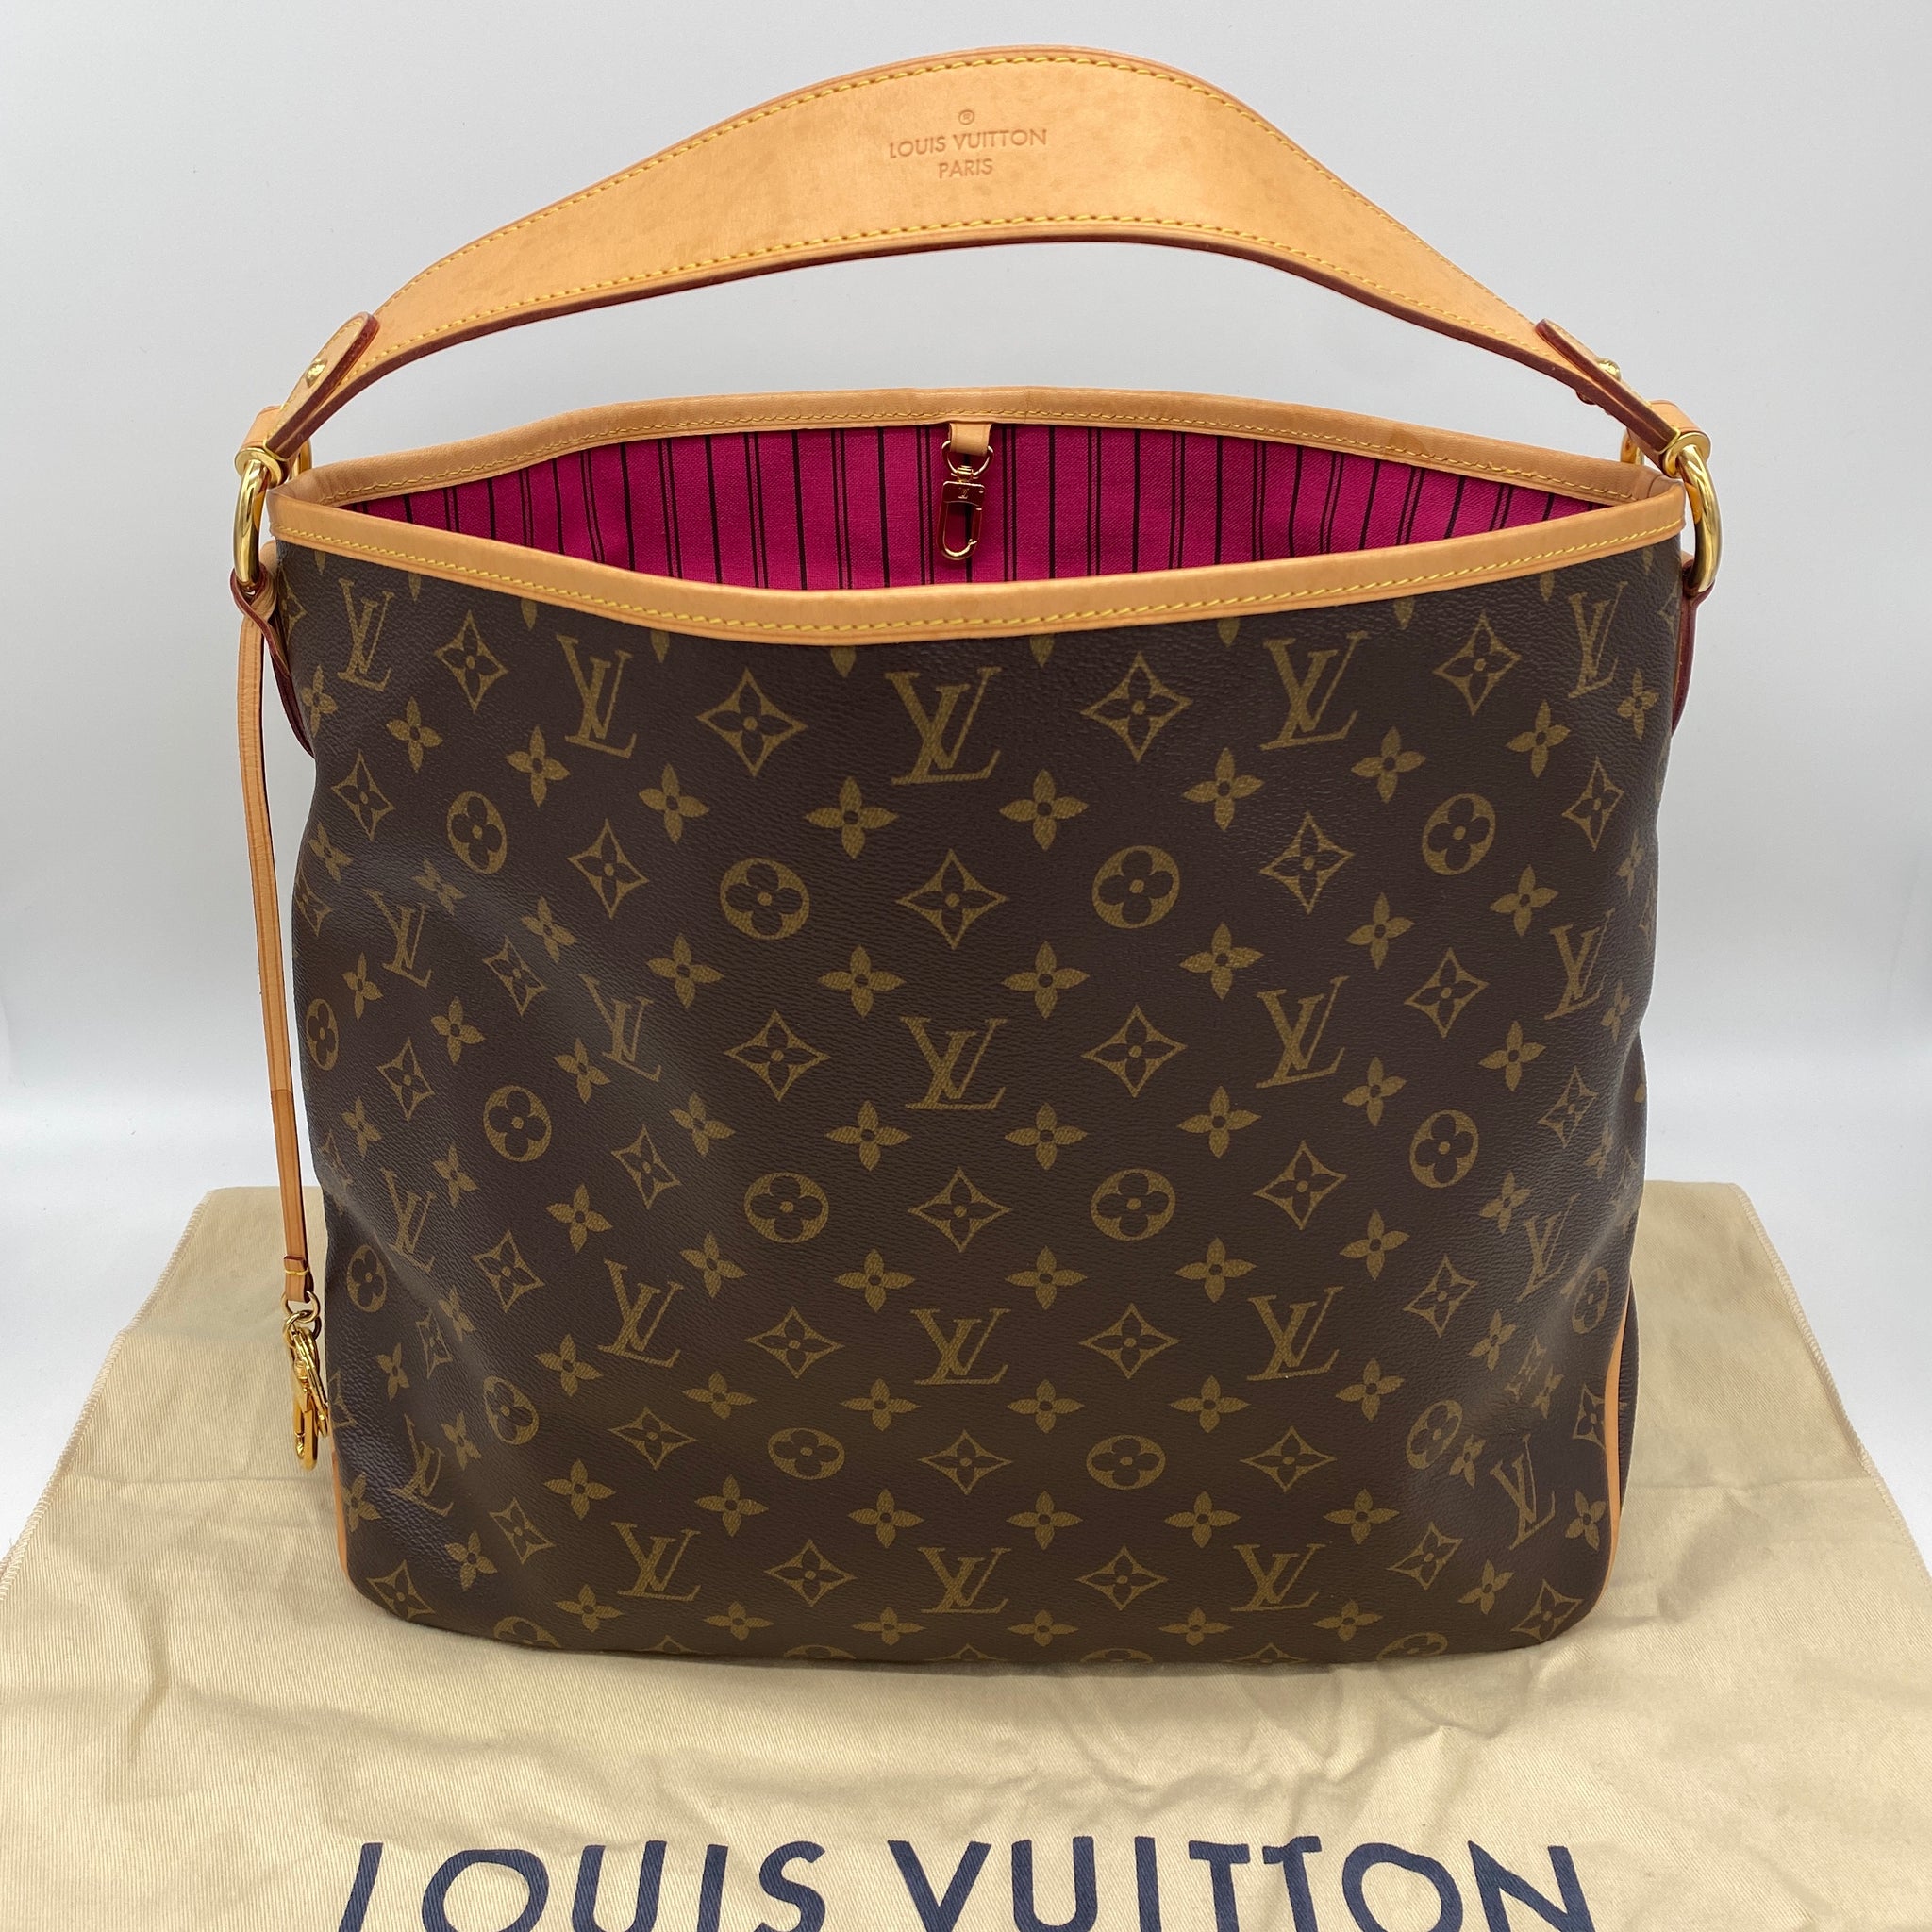 Louis Vuitton Monogram Delightful PM Pivoine Hobo Bag - $1301 - From Anna